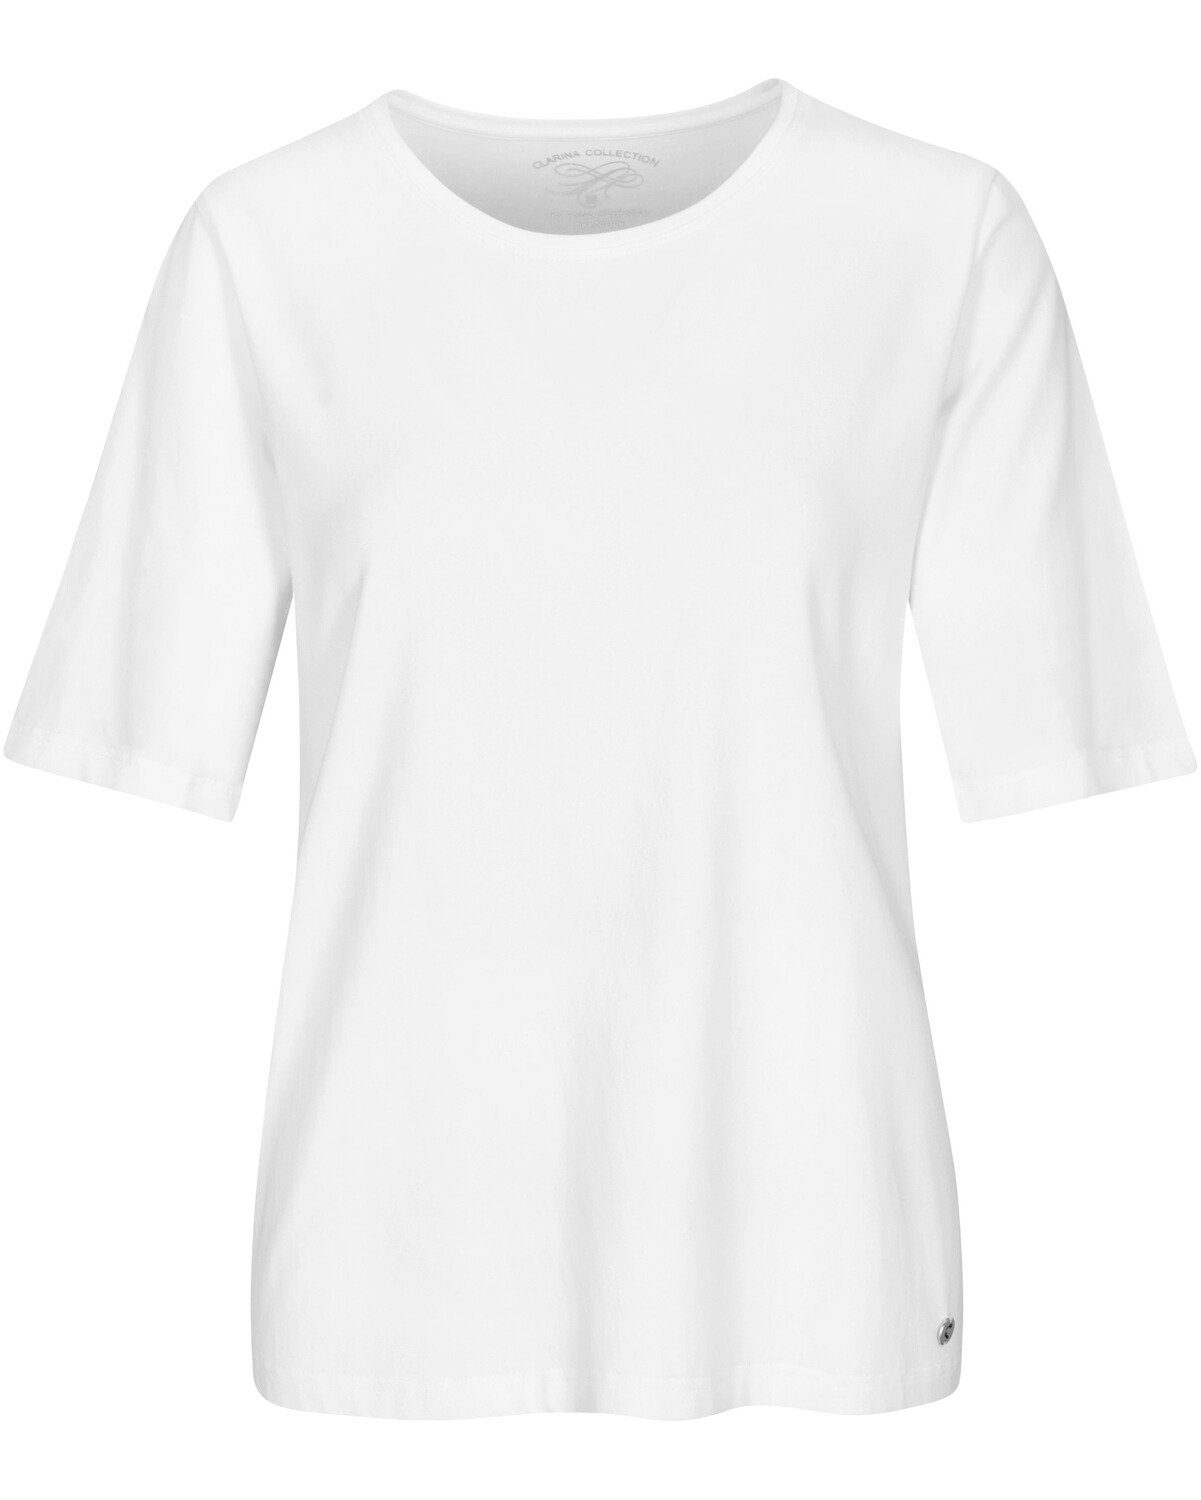 Clarina T-Shirt Weiß Halbarm-Shirt